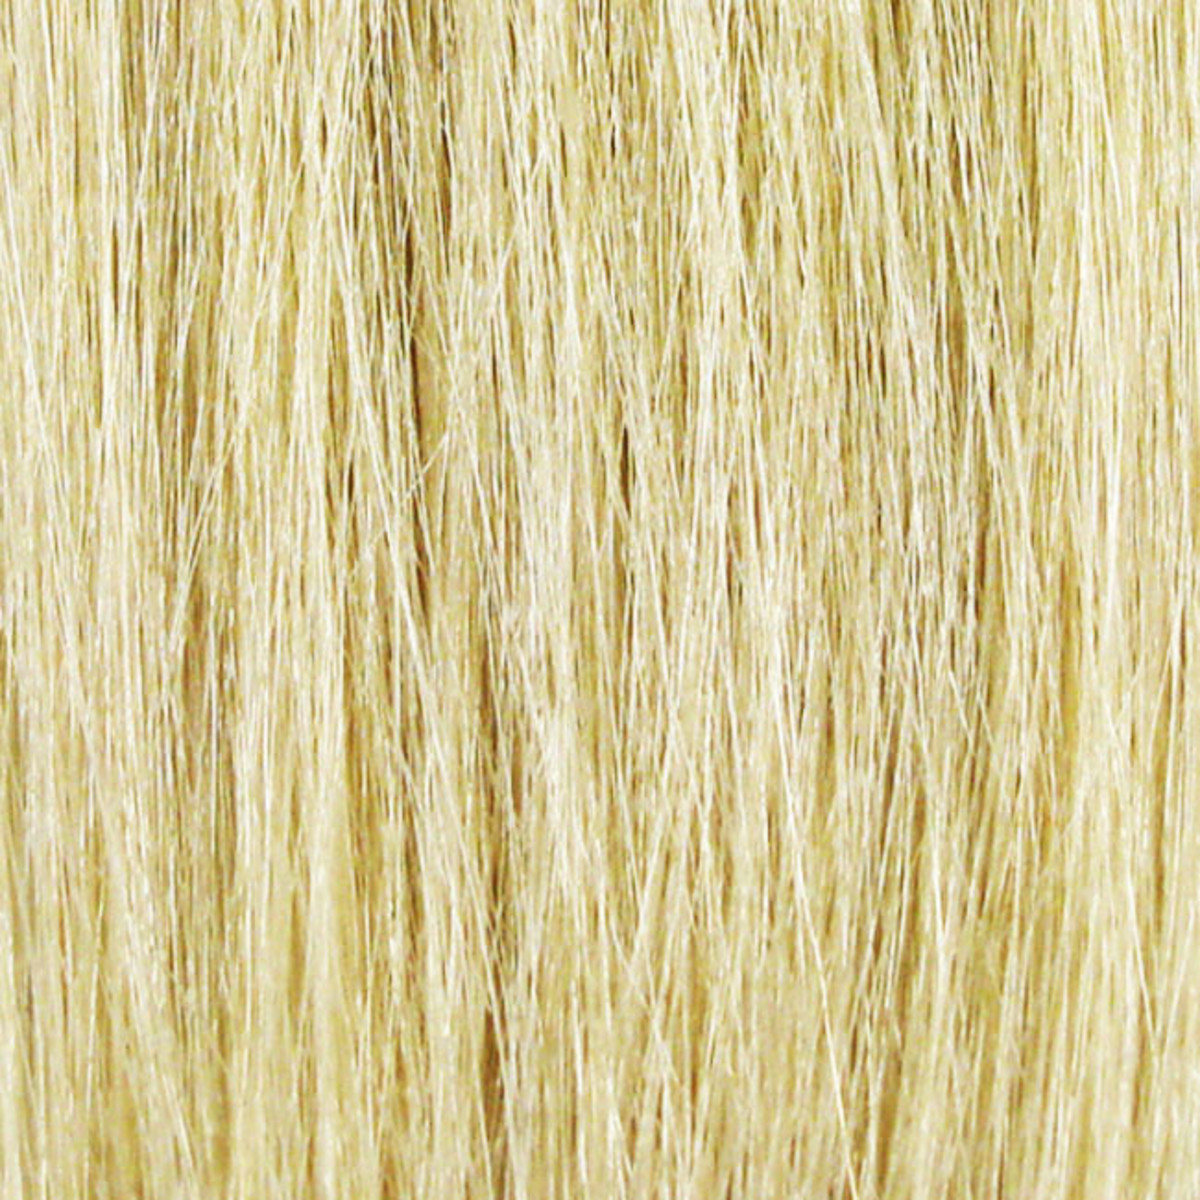 Light blonde hair